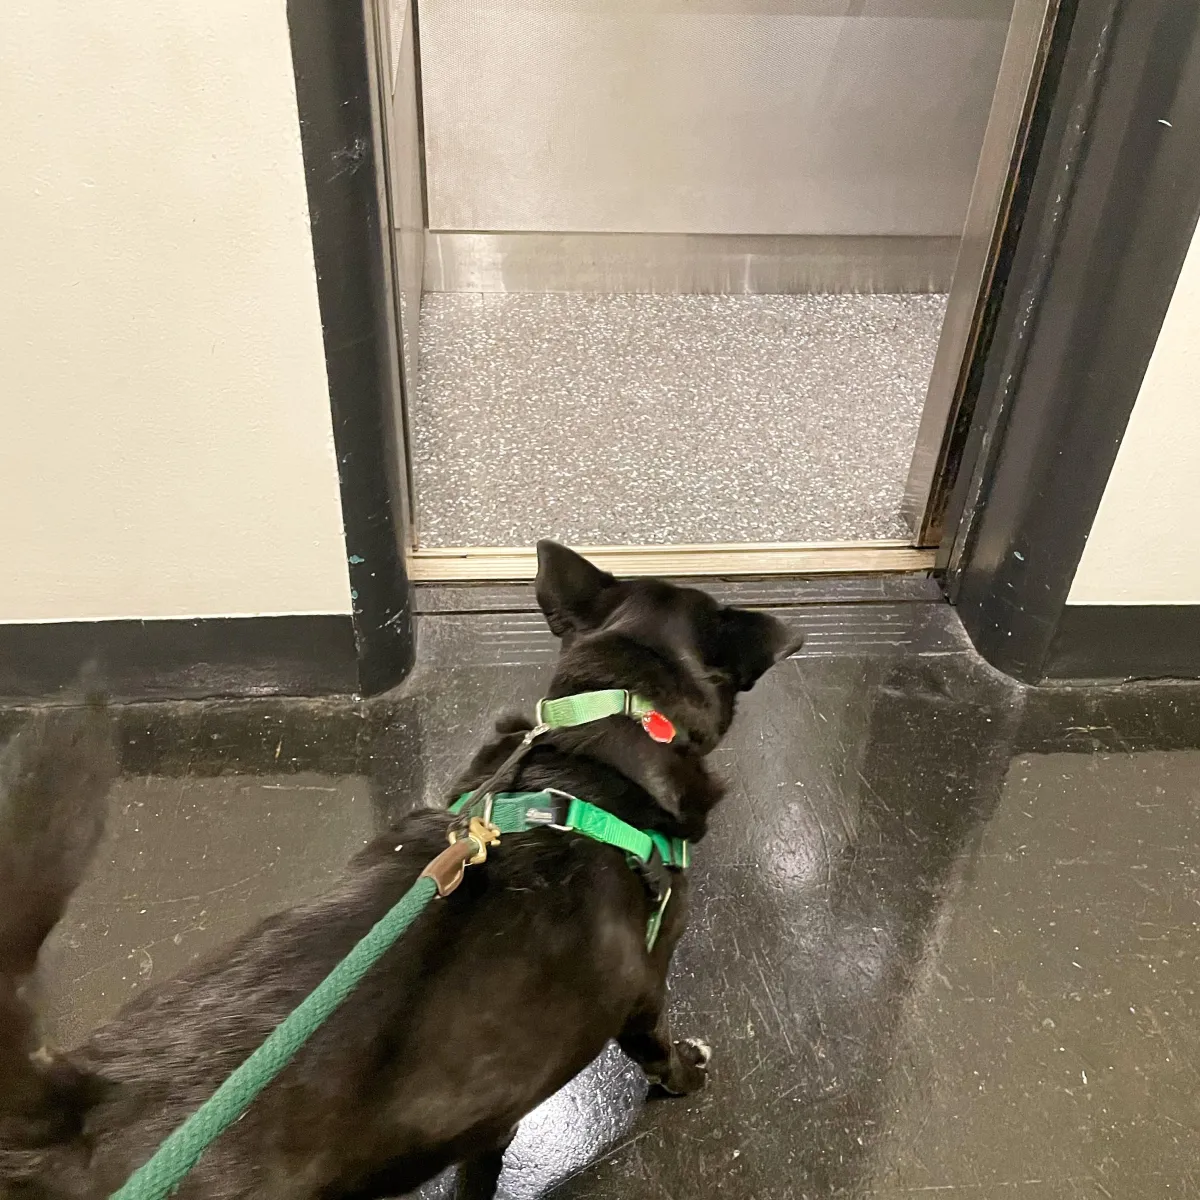 A medium sized black dog wearing green equipment walks toward an elevator door.